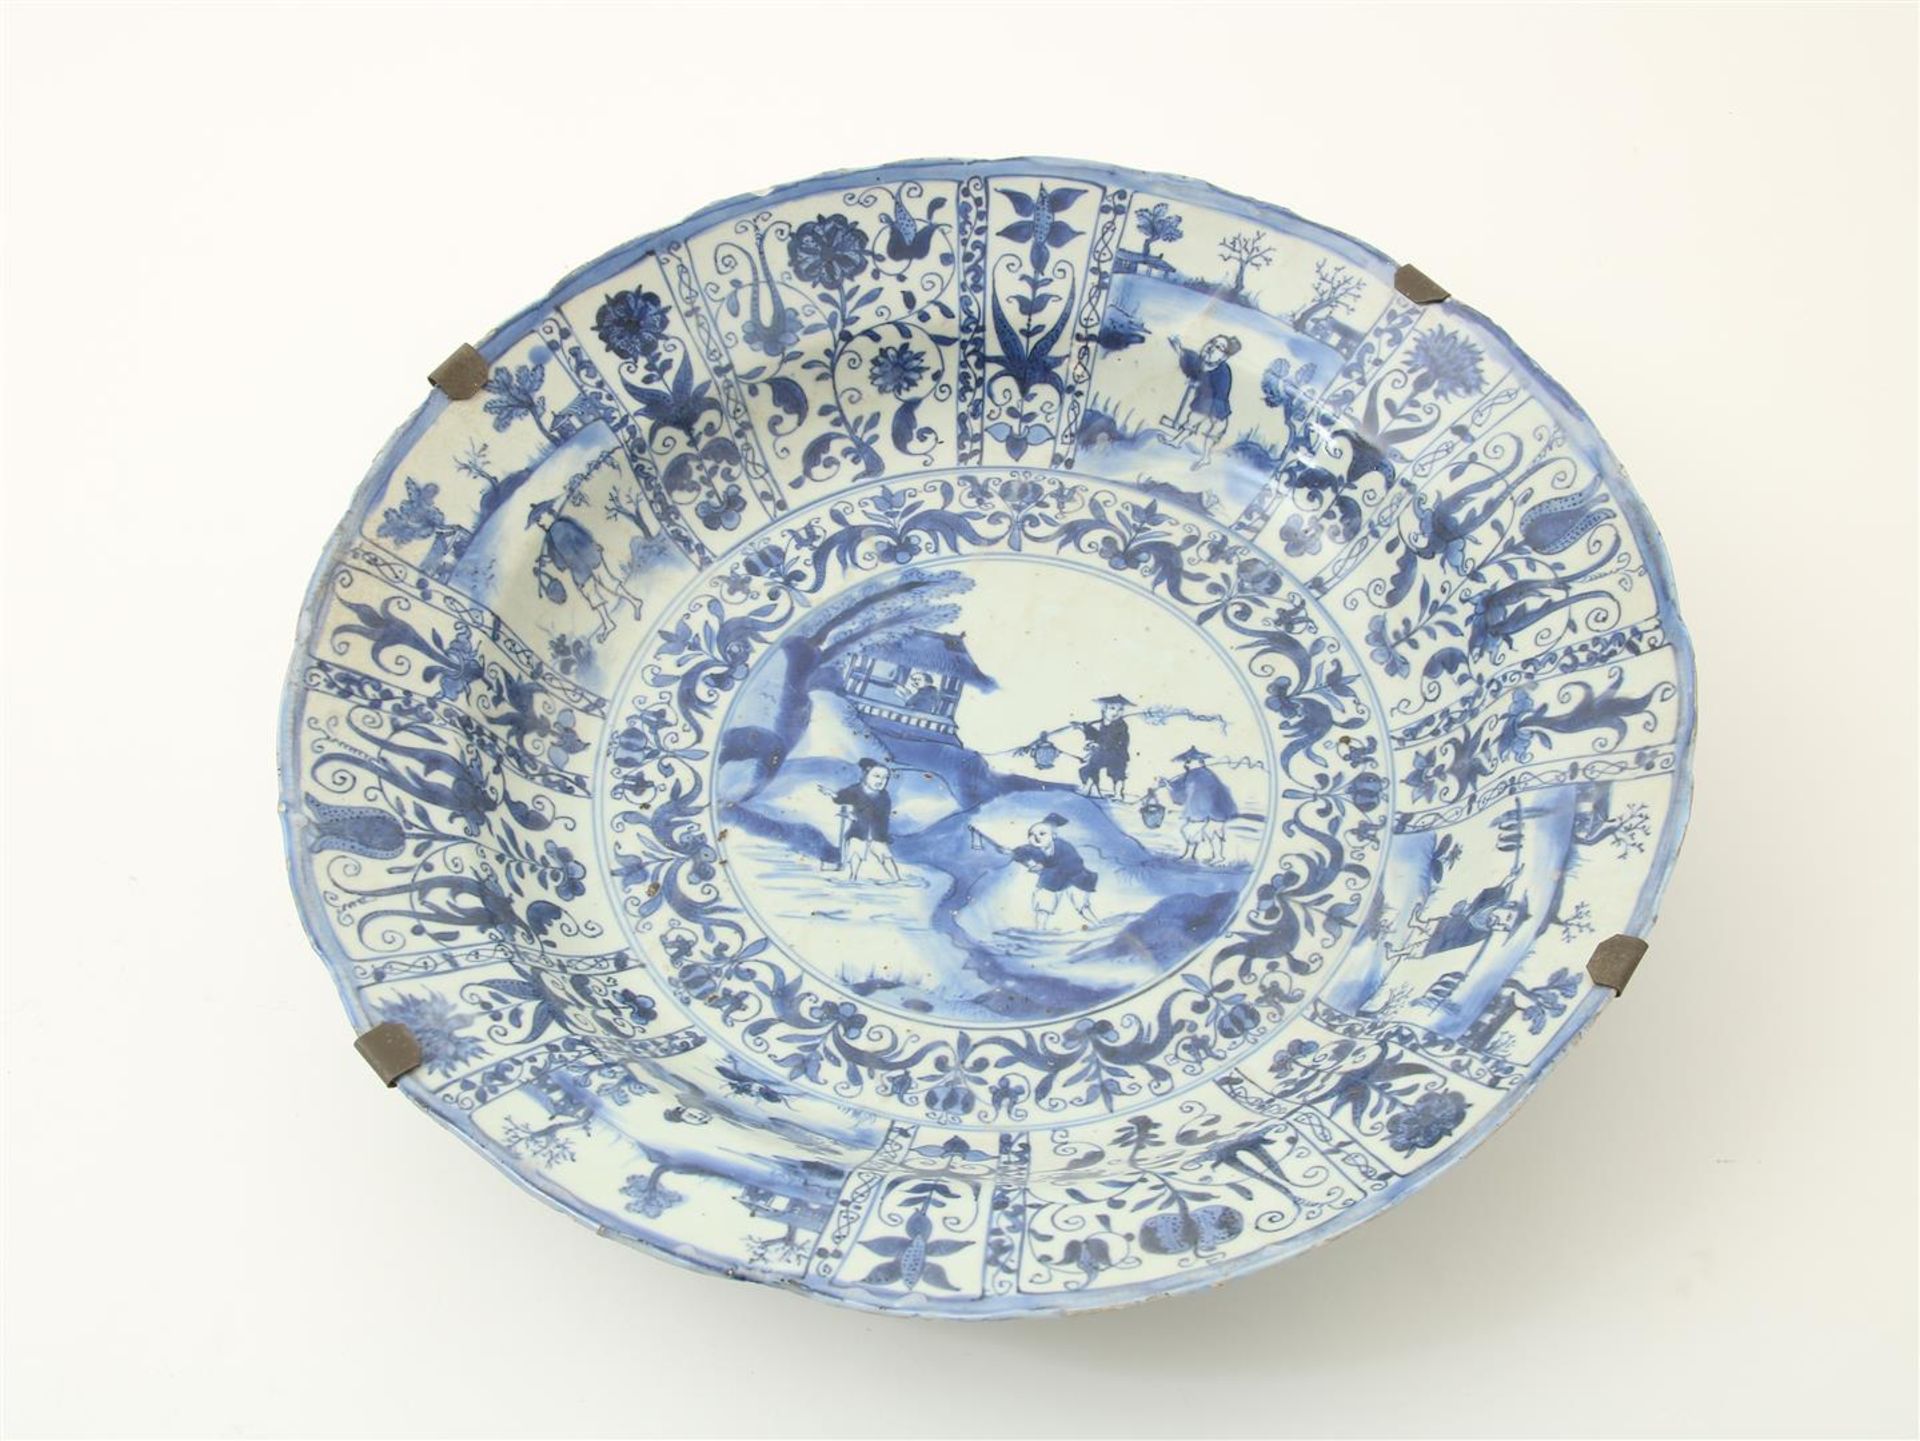 Kraakporcelain plate, China 1635-1650